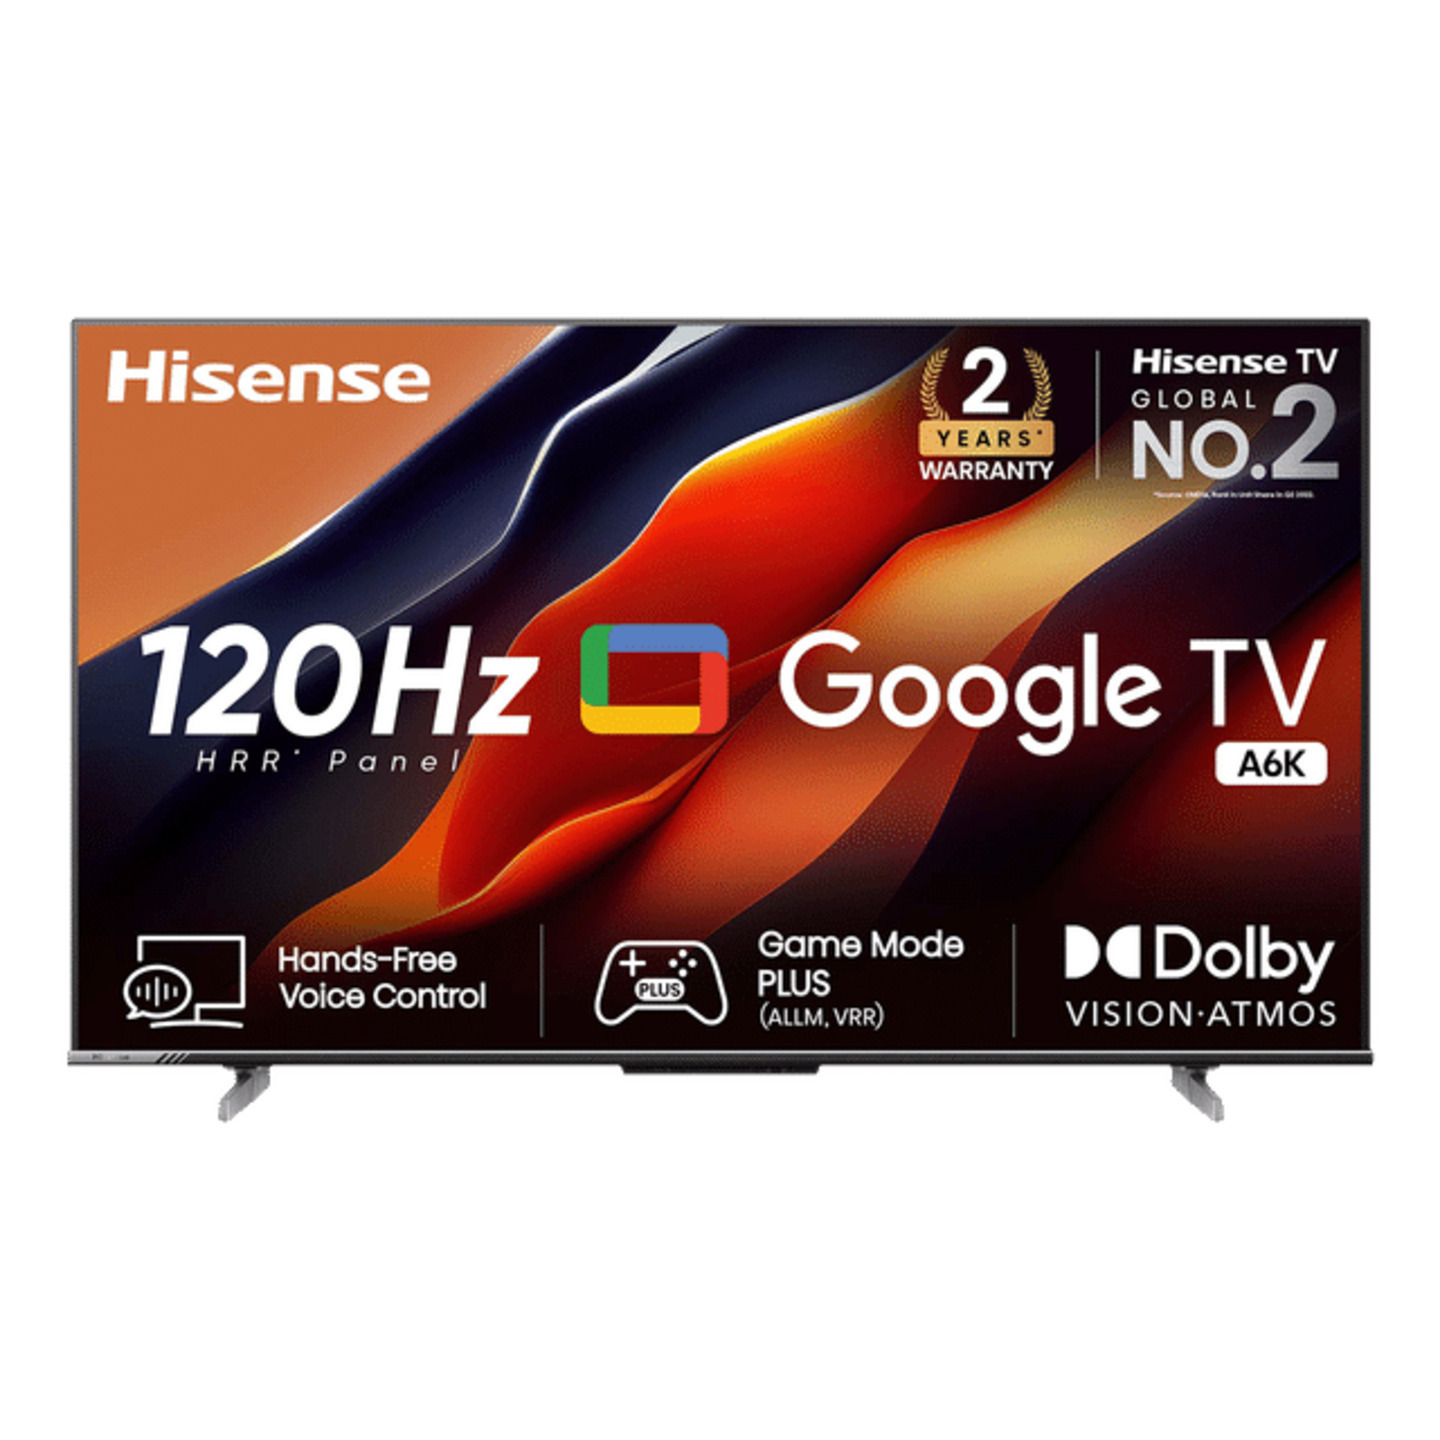 Hisense A6K 140 cm 55 inch 4K Ultra HD LED Google TV with Dolby Atmos